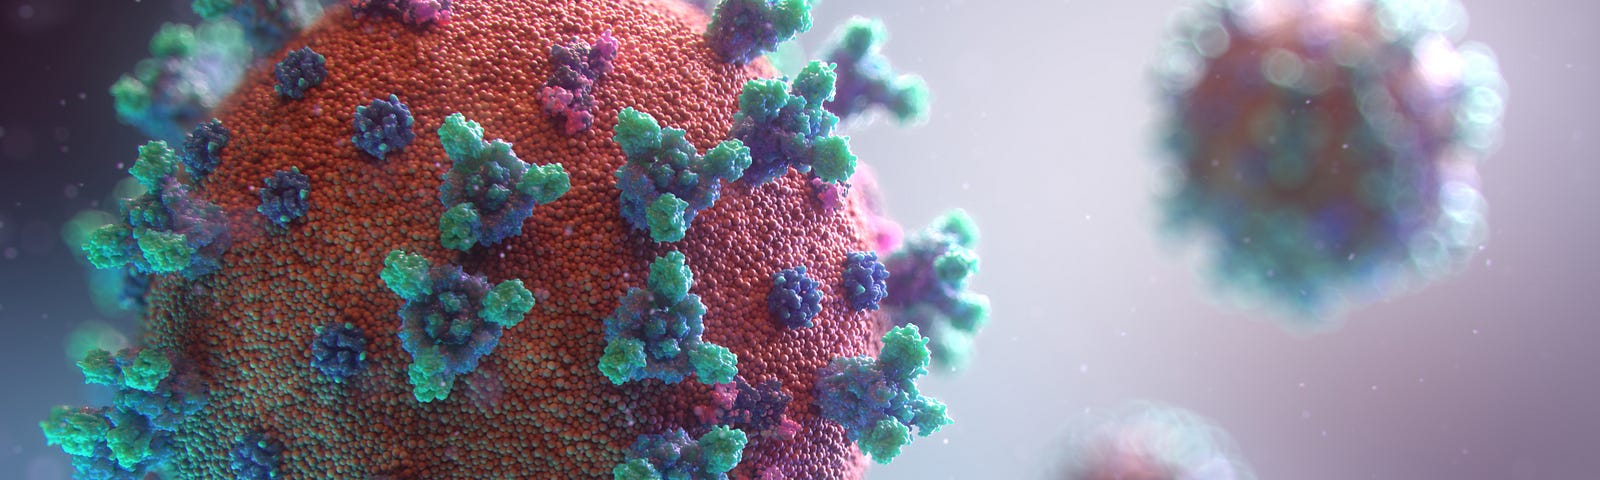 Image of Covid-19 virus